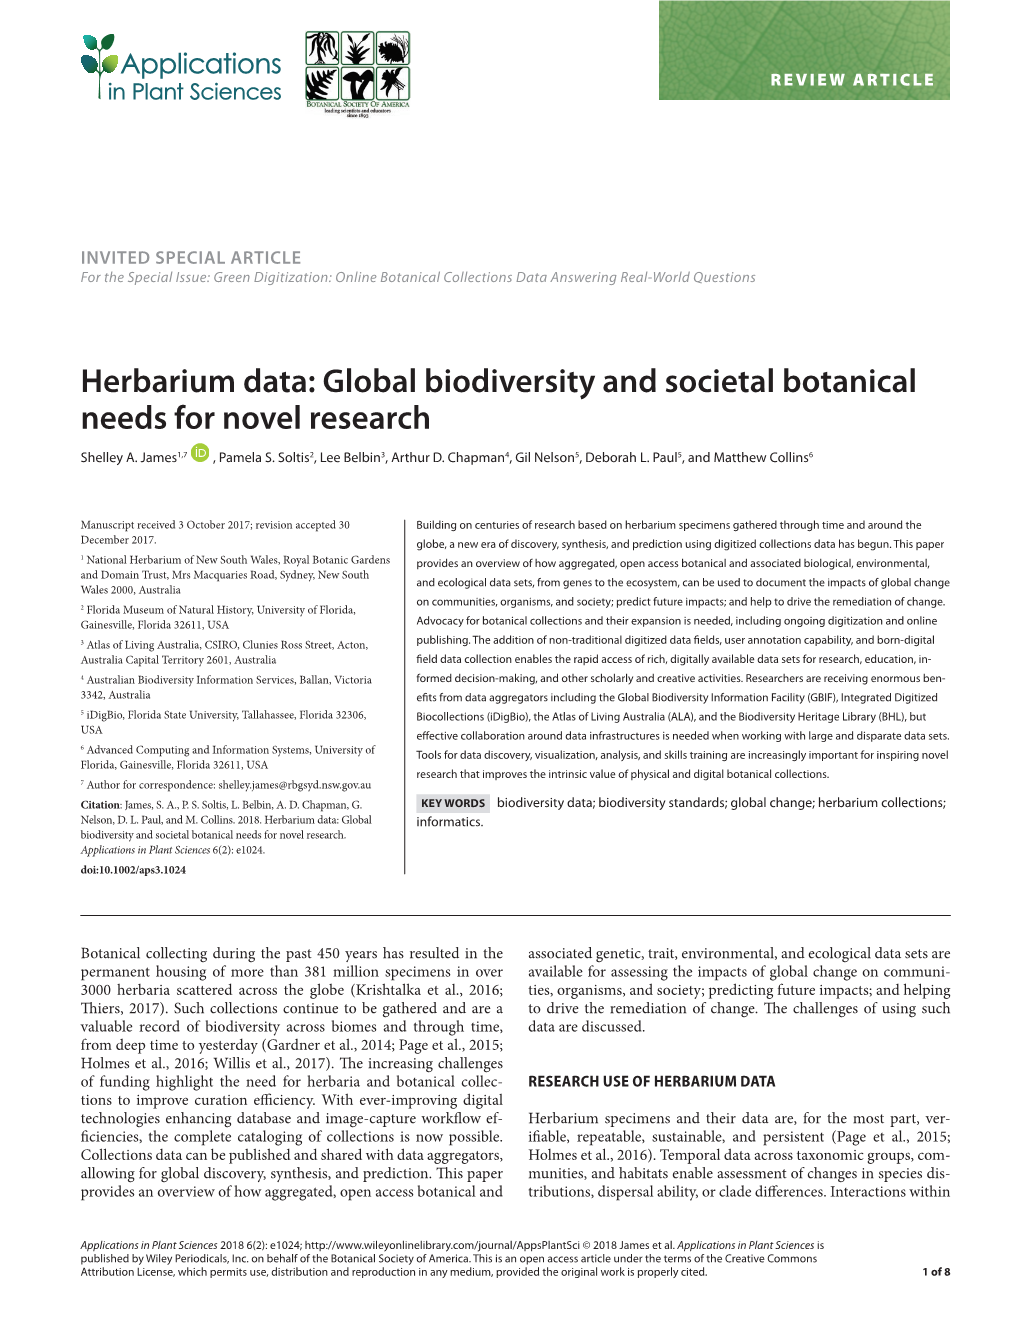 Herbarium Data: Global Biodiversity and Societal Botanical Needs for Novel Research